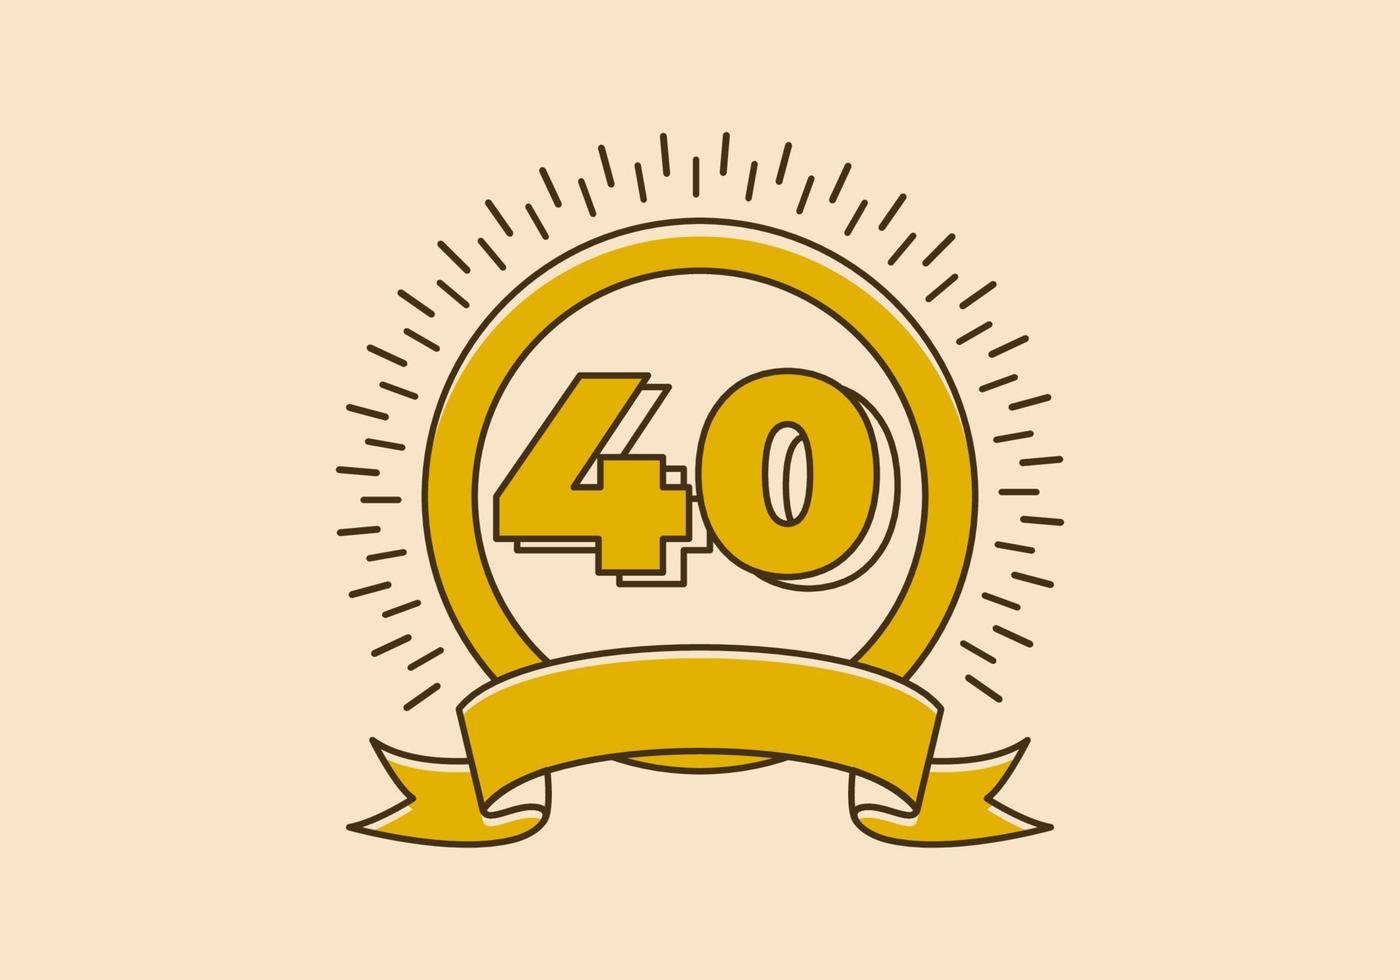 distintivo de círculo amarelo vintage com o número 40 nele vetor